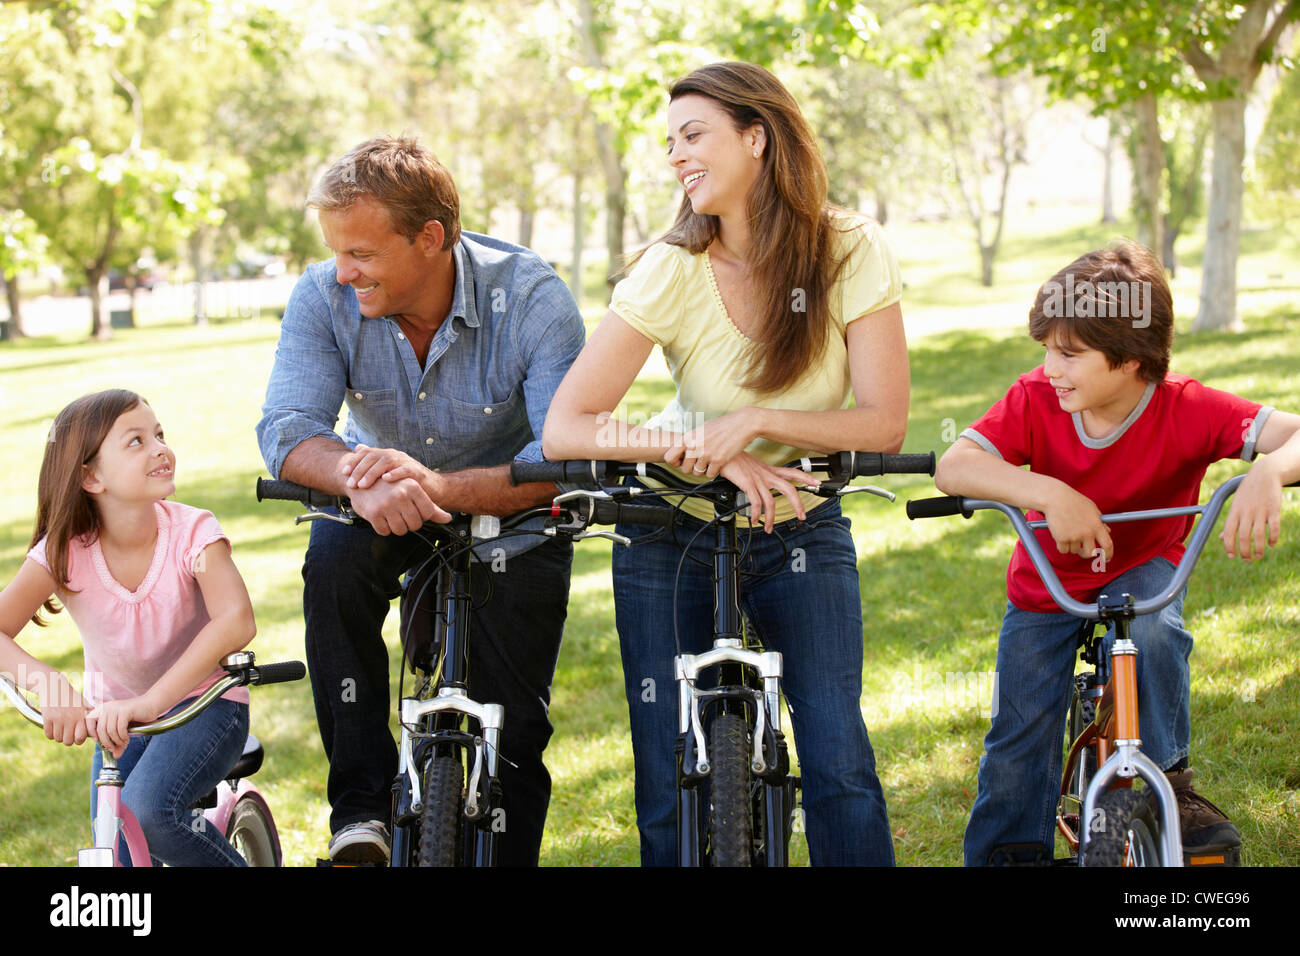 Family riding bikes in park Stock Photo